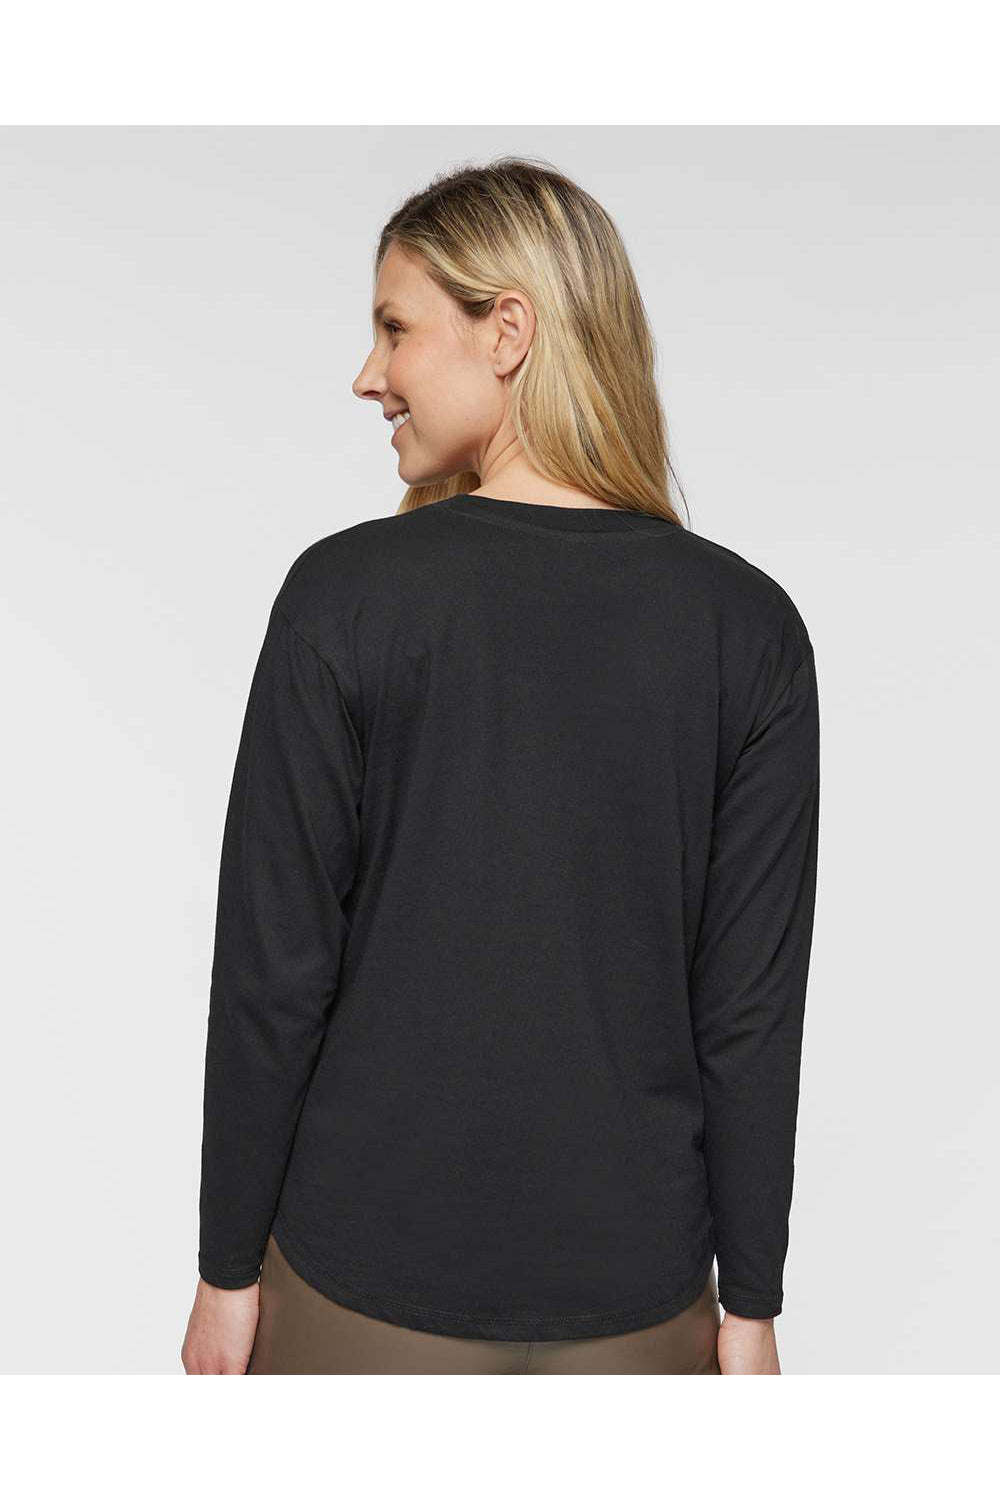 LAT 3508 Womens Fine Jersey Long Sleeve Crewneck T-Shirt Black Model Back